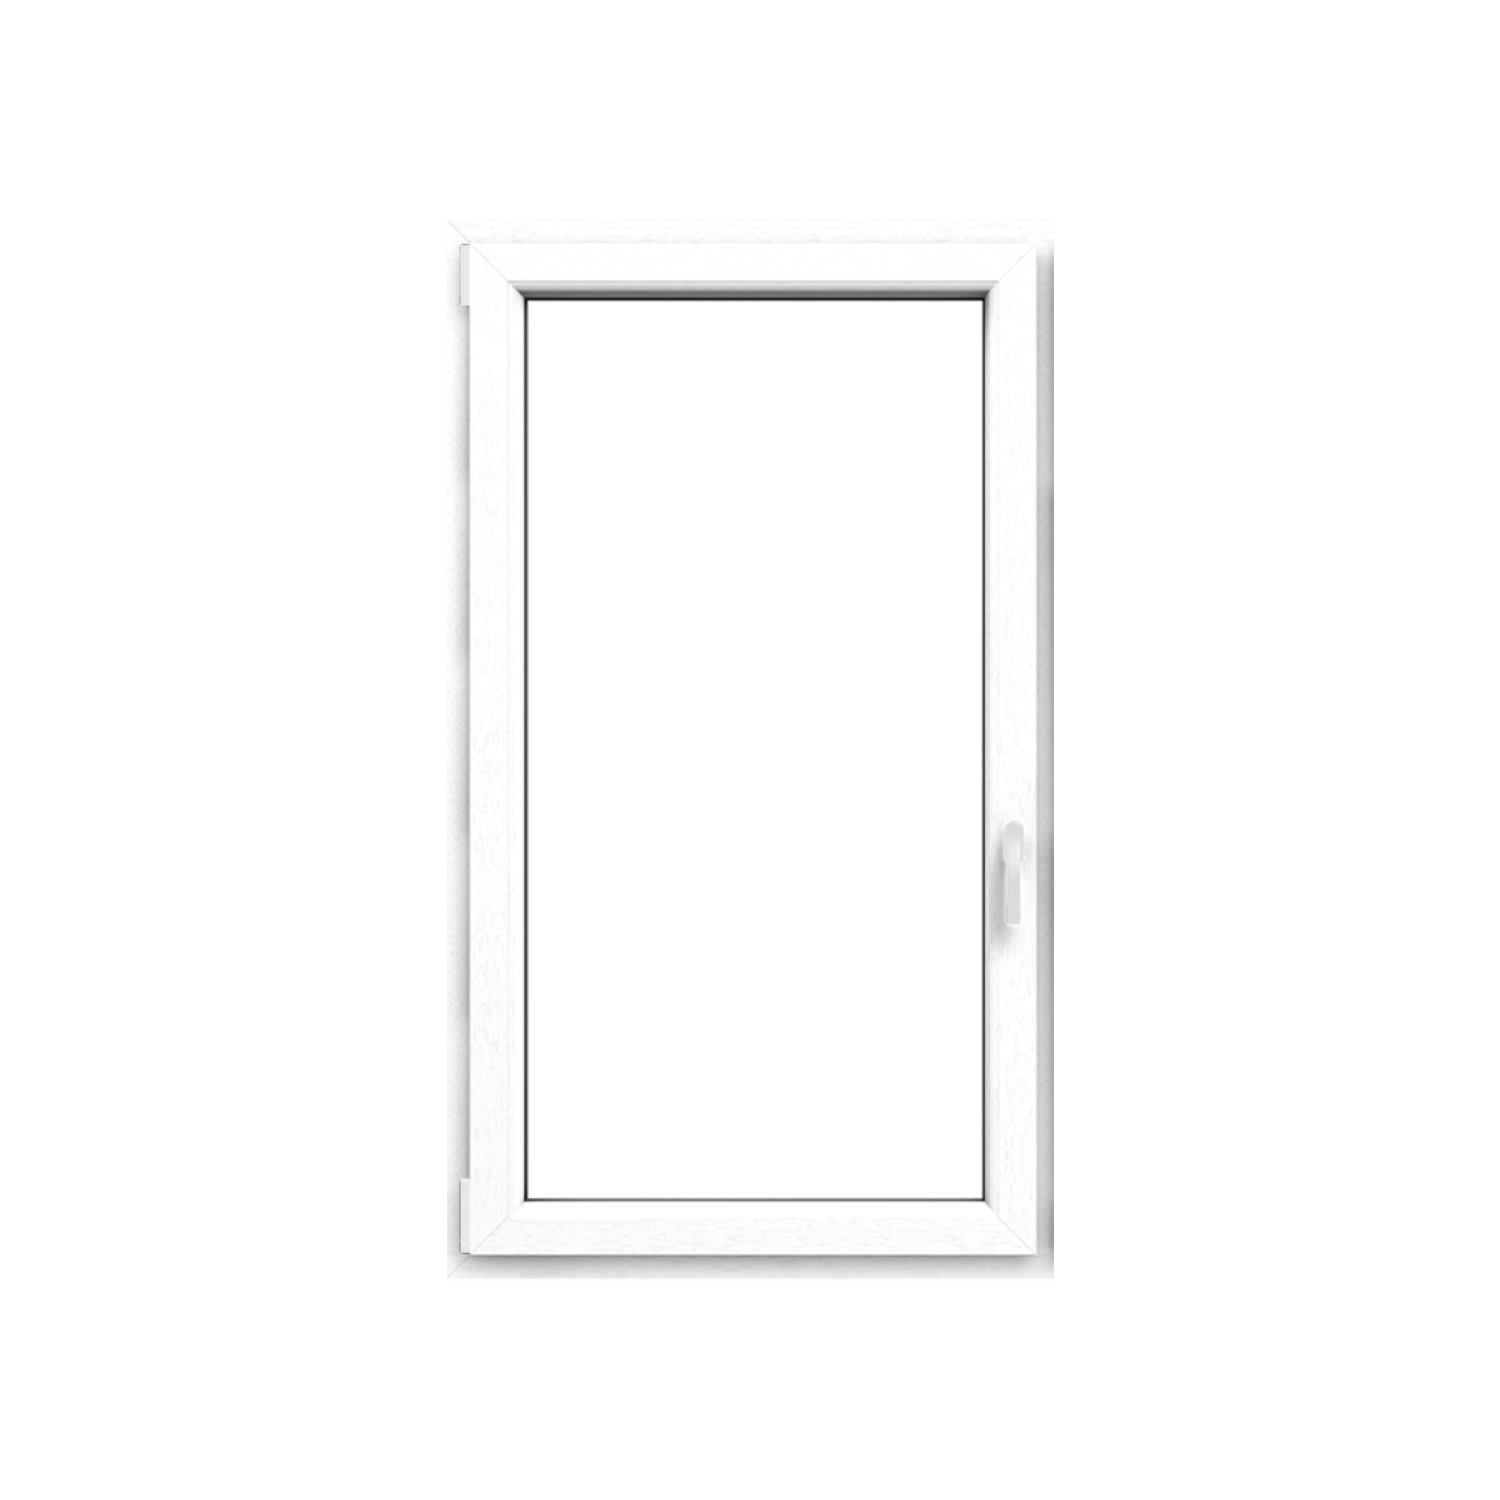 Okno plastové EKOSUN 6 bílé, OS1A 120x120 L, trojsklo, 6kom/81mm (vč. kliky)